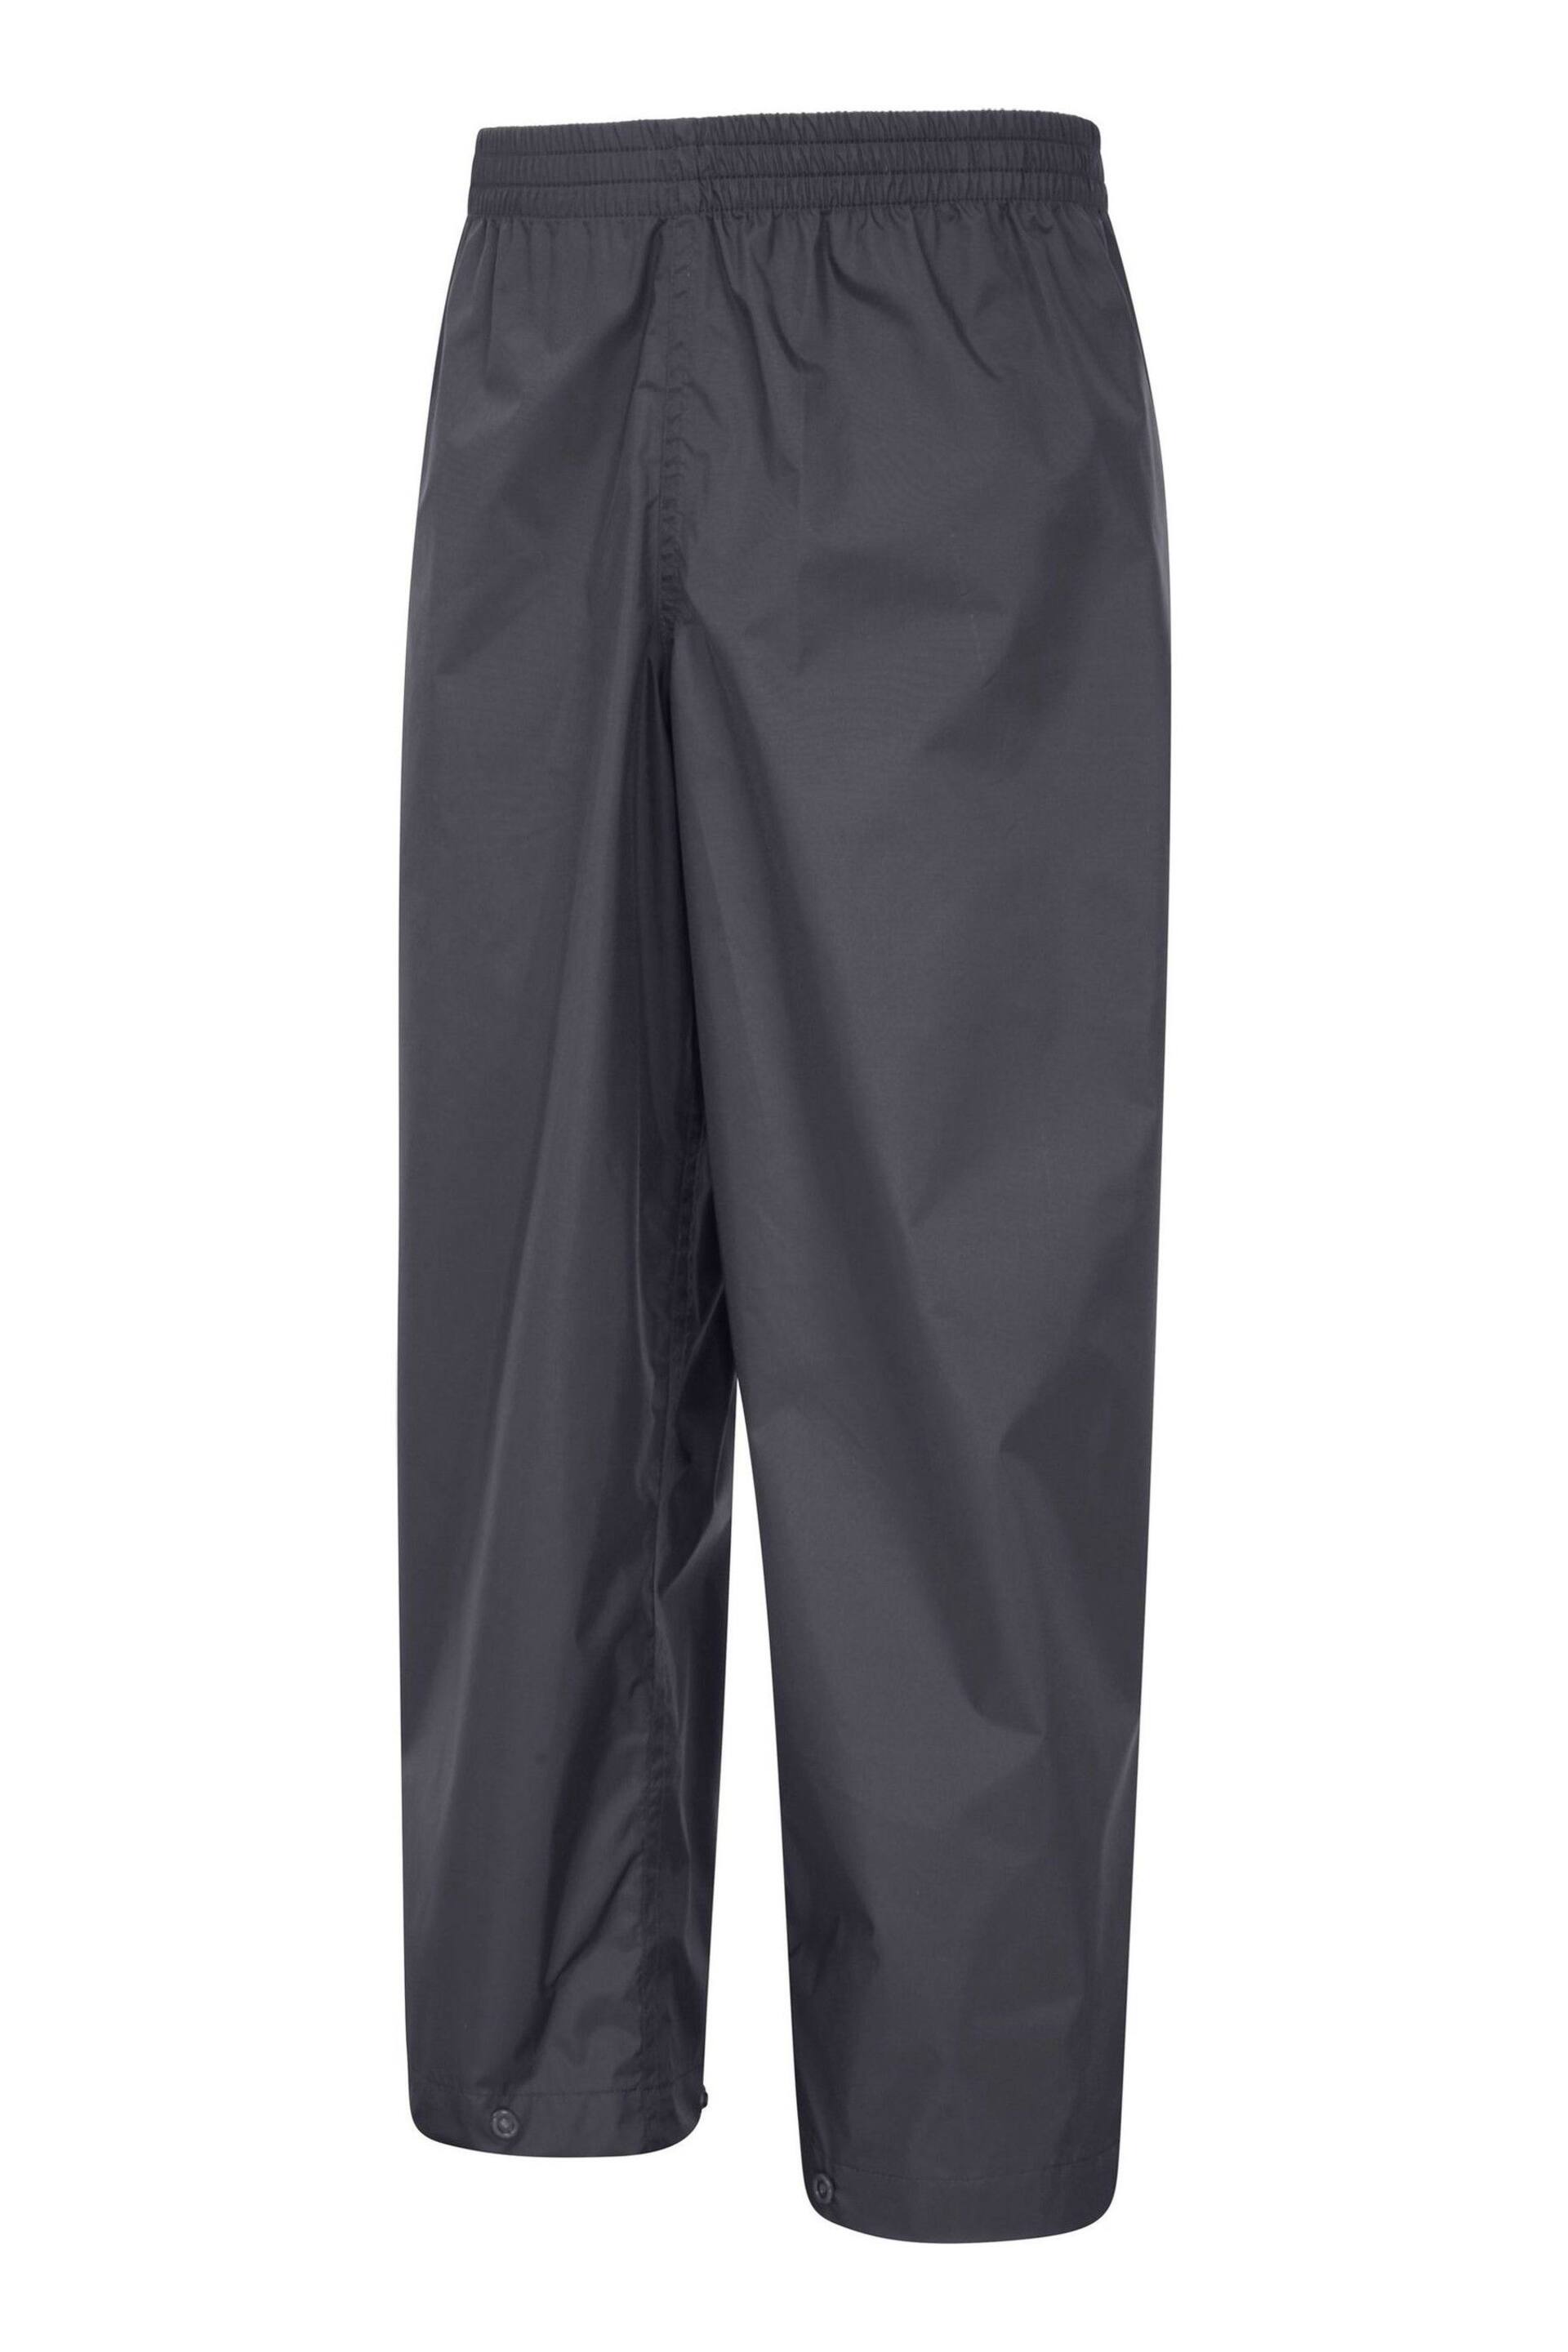 Mountain Warehouse Grey Pakka Kids Waterproof Over Trousers - Image 3 of 5